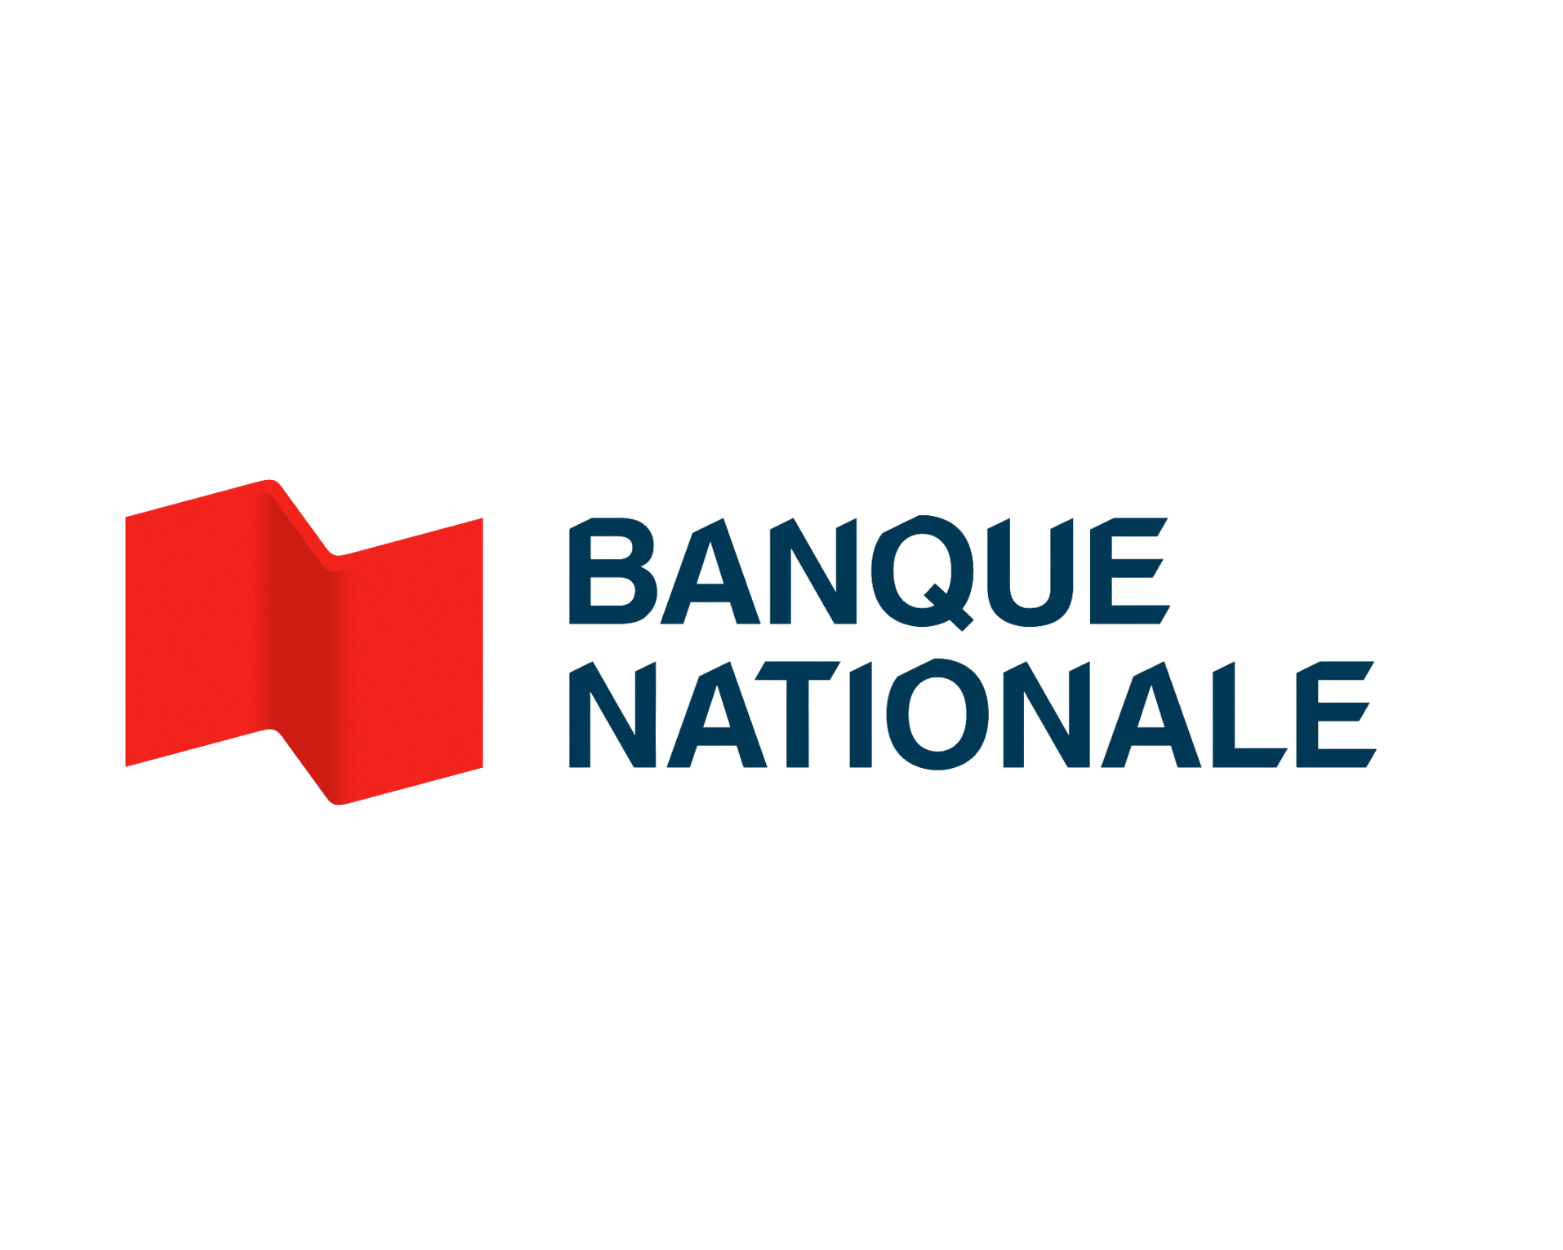 Banque nationale